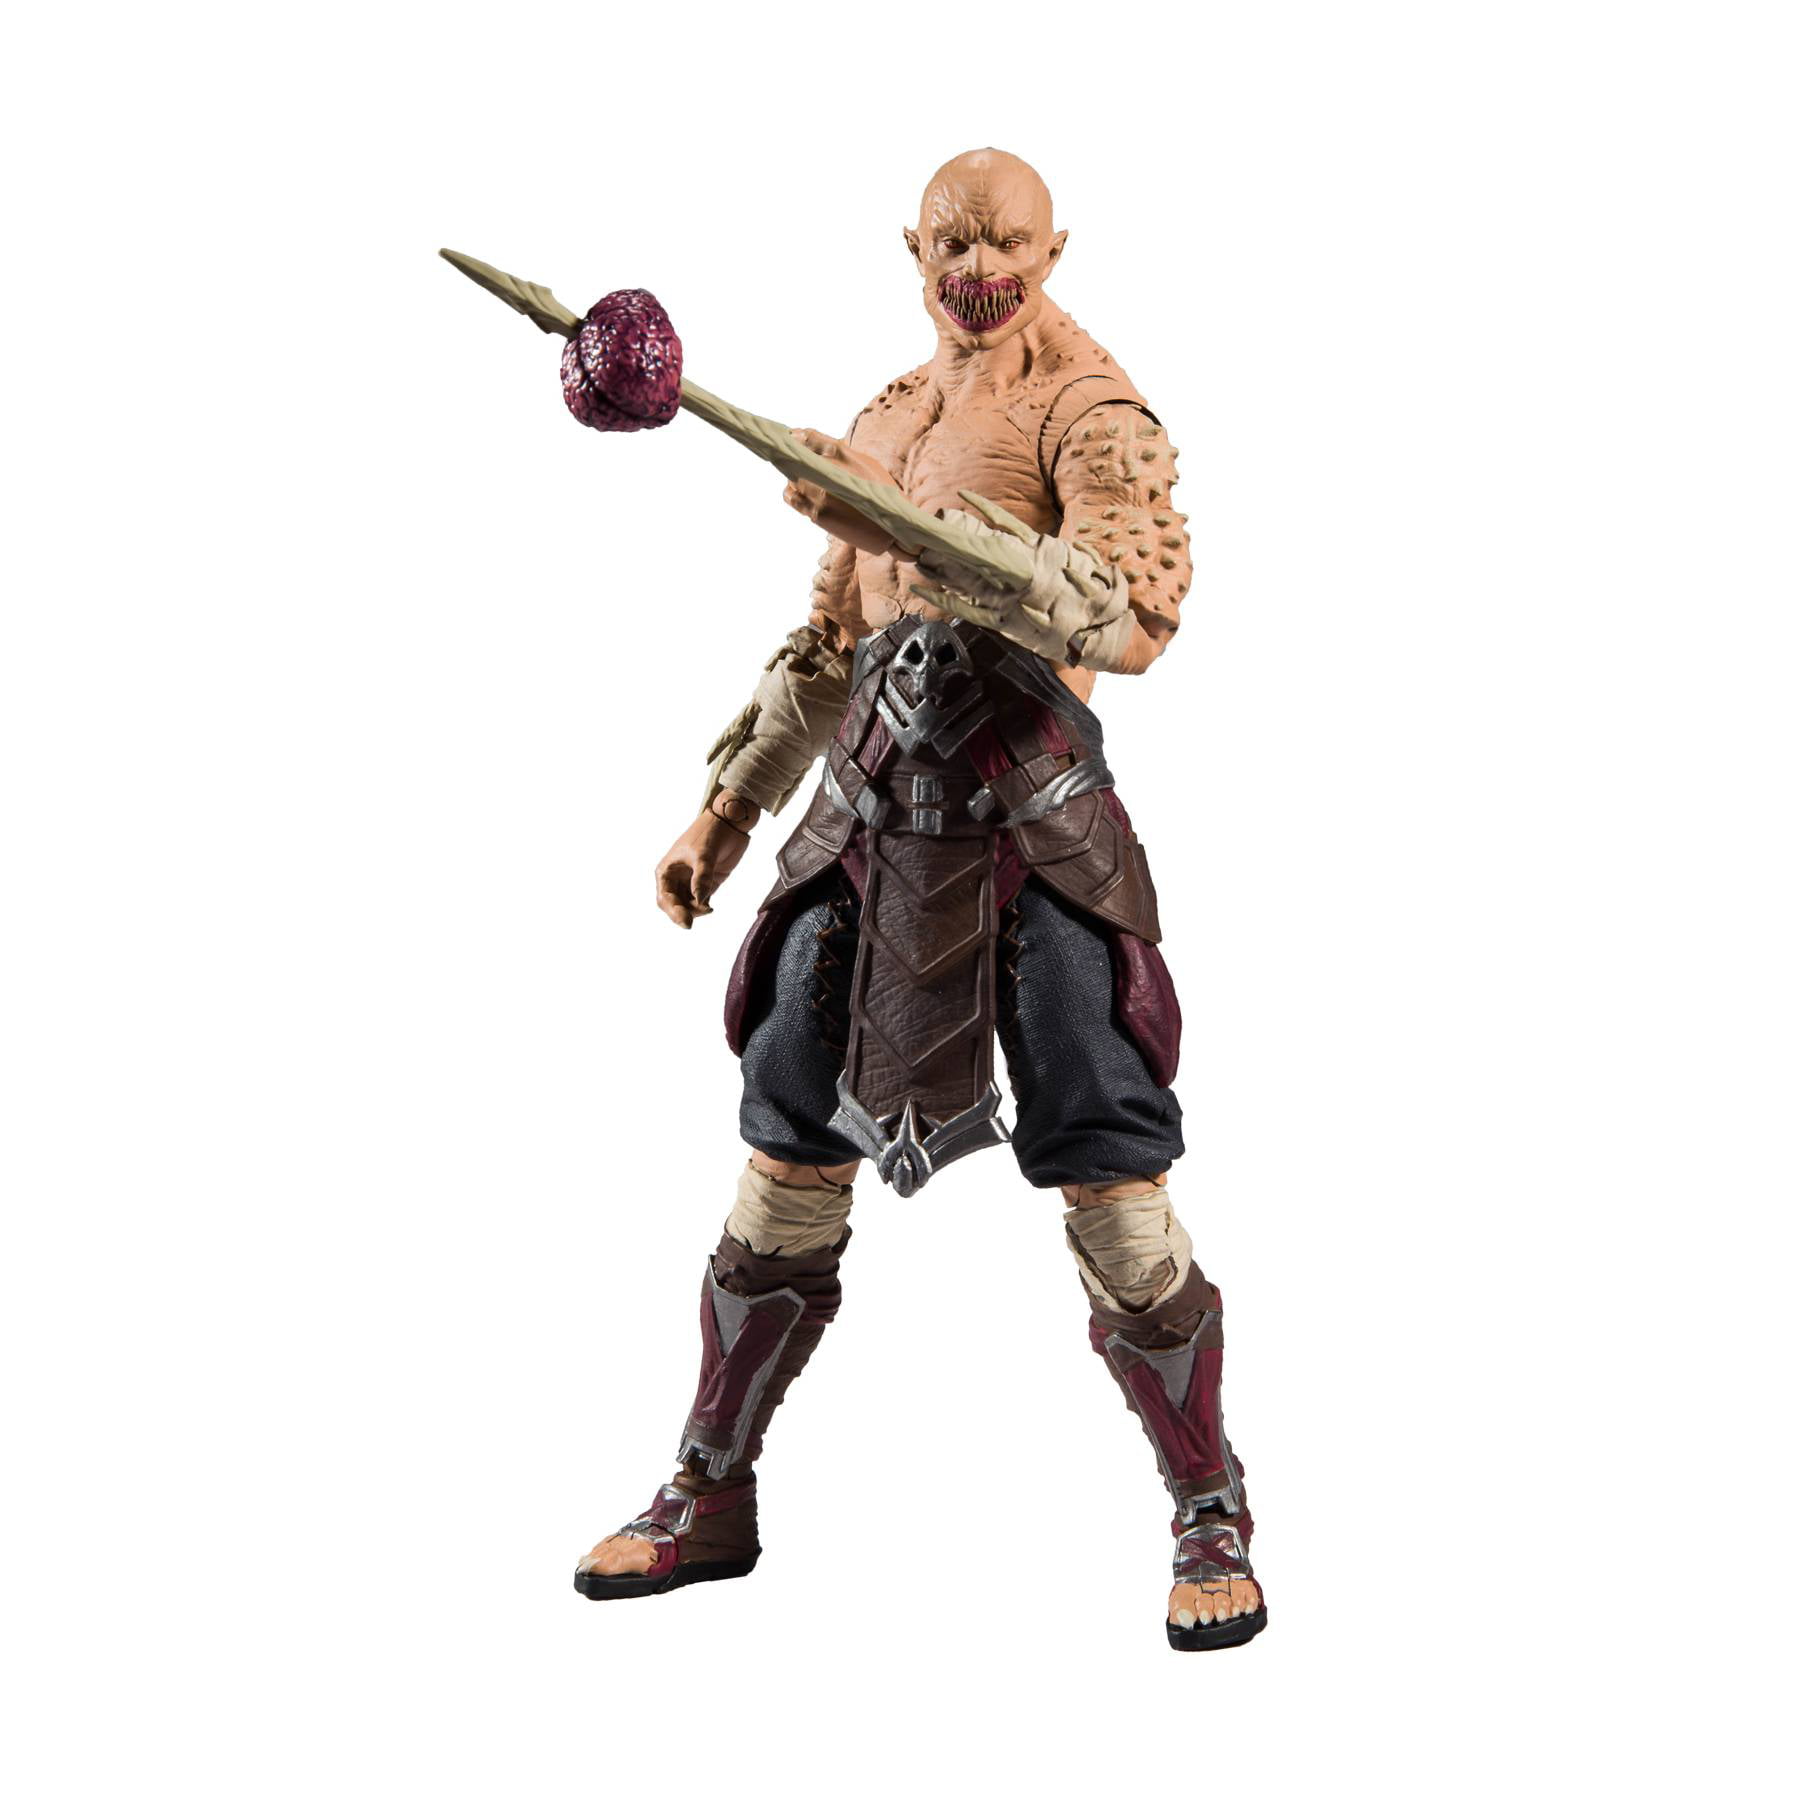 McFarlane Toys Mortal Kombat 11 Shao Kahn Figure Revealed?!?